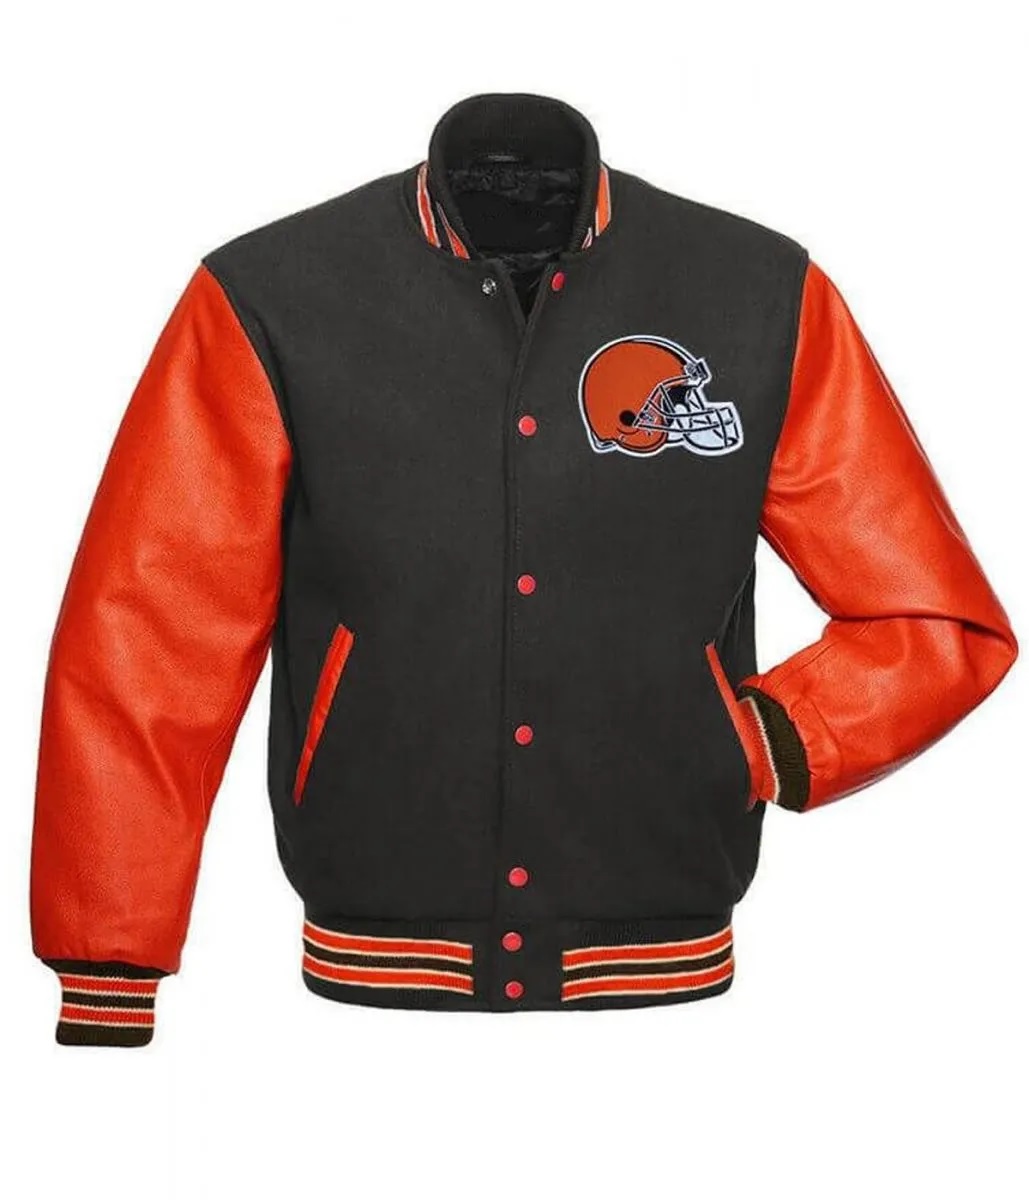 Cleveland Browns Grey and Orange Jacket